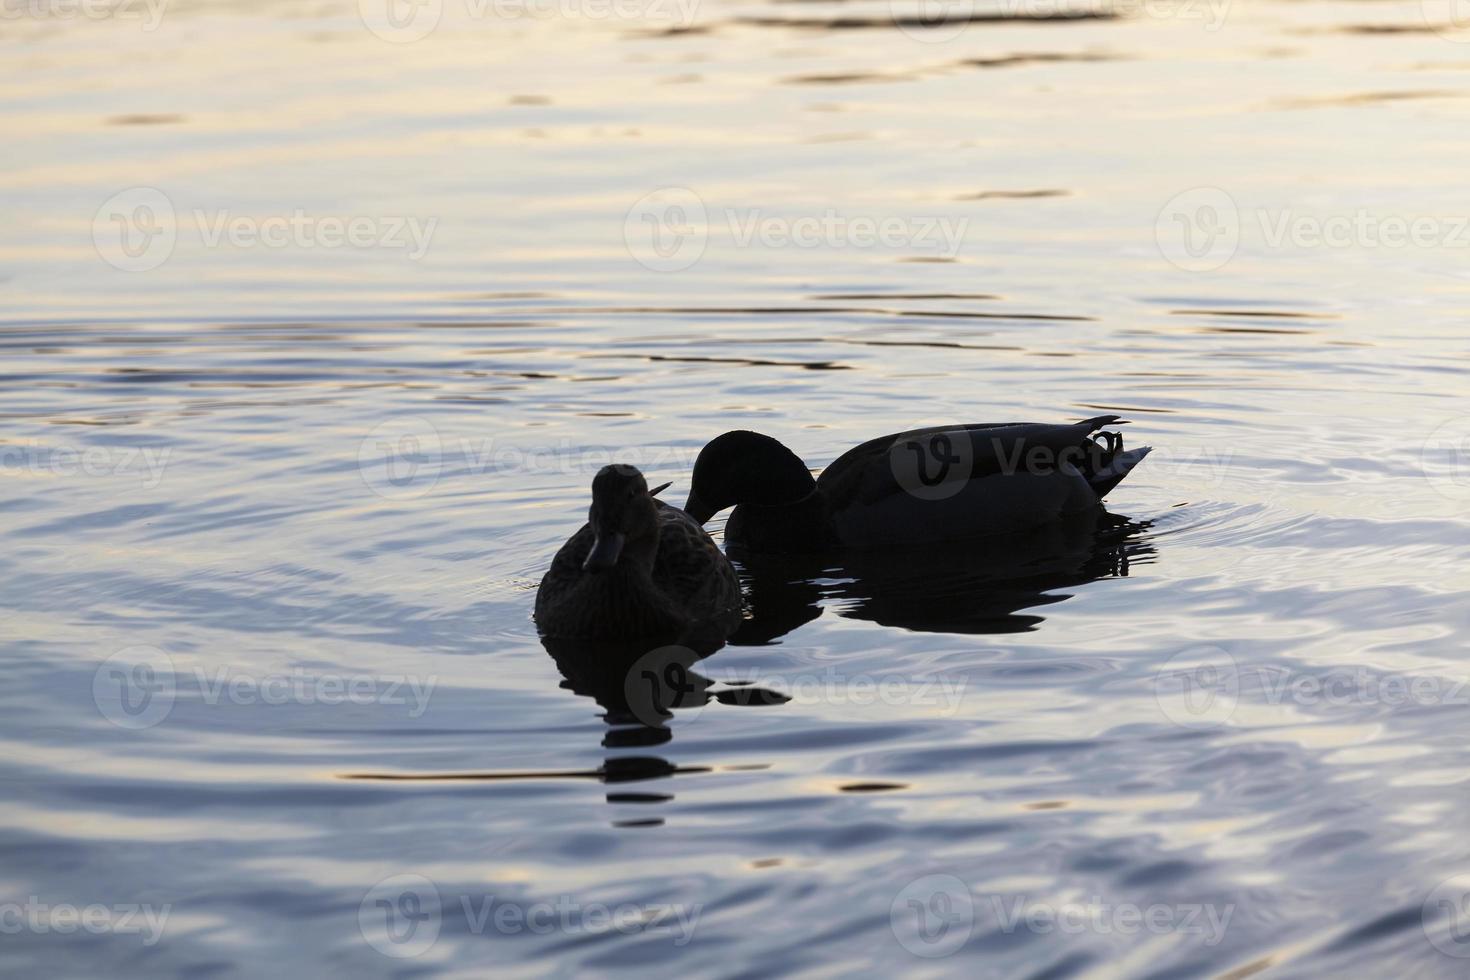 wild ducks floating on the lake photo